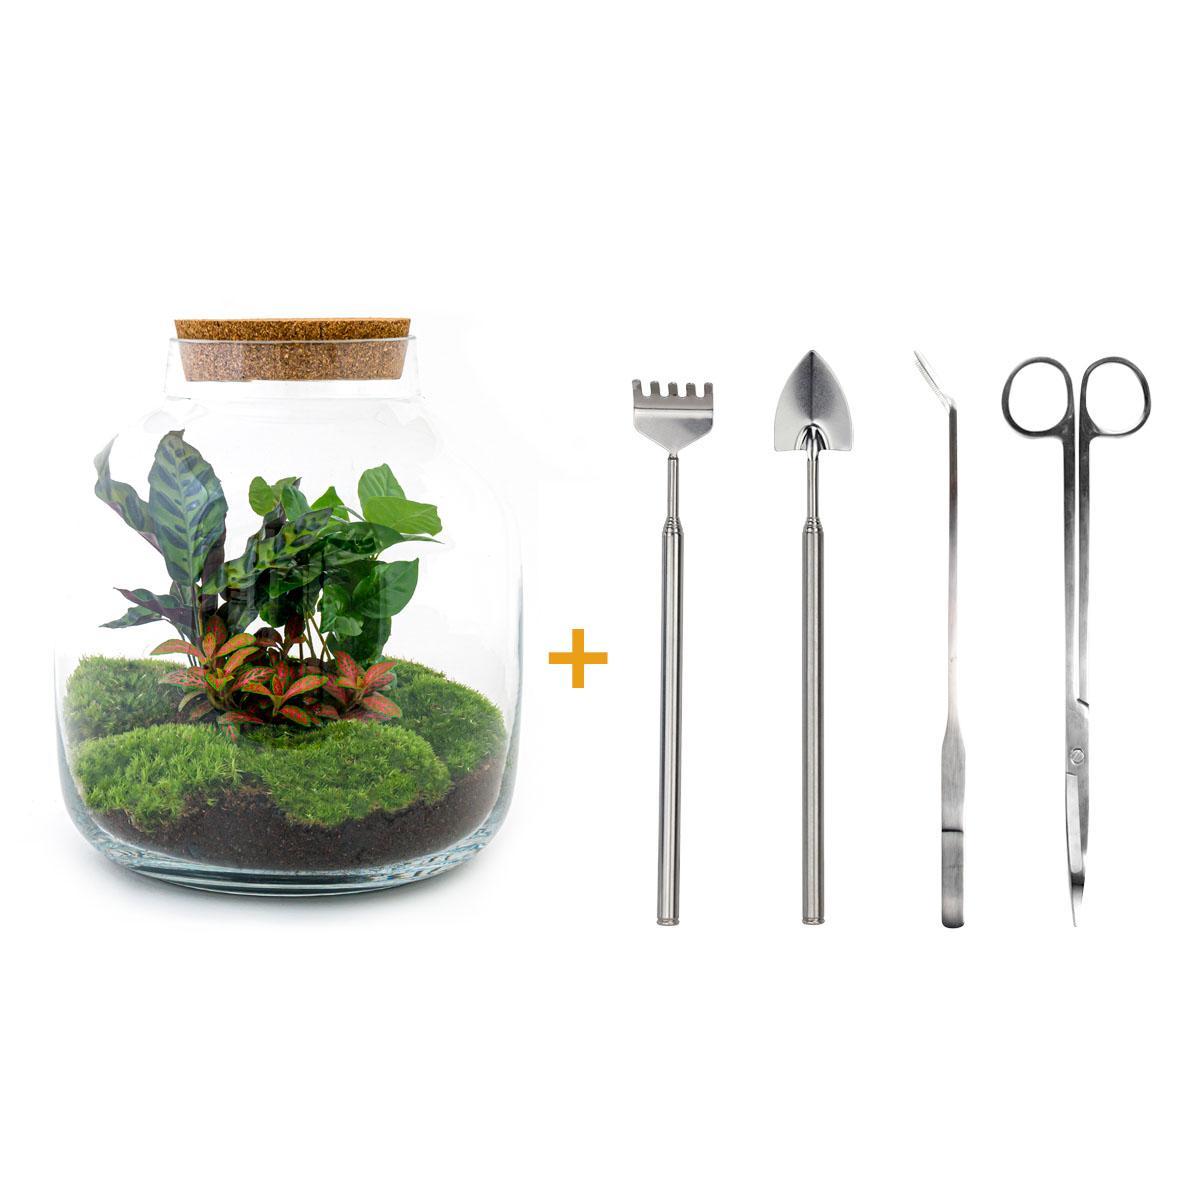 DIY terrarium - Billie Botanical - ↑ 30 cm + Rake + Shovel + Tweezer + Scissors